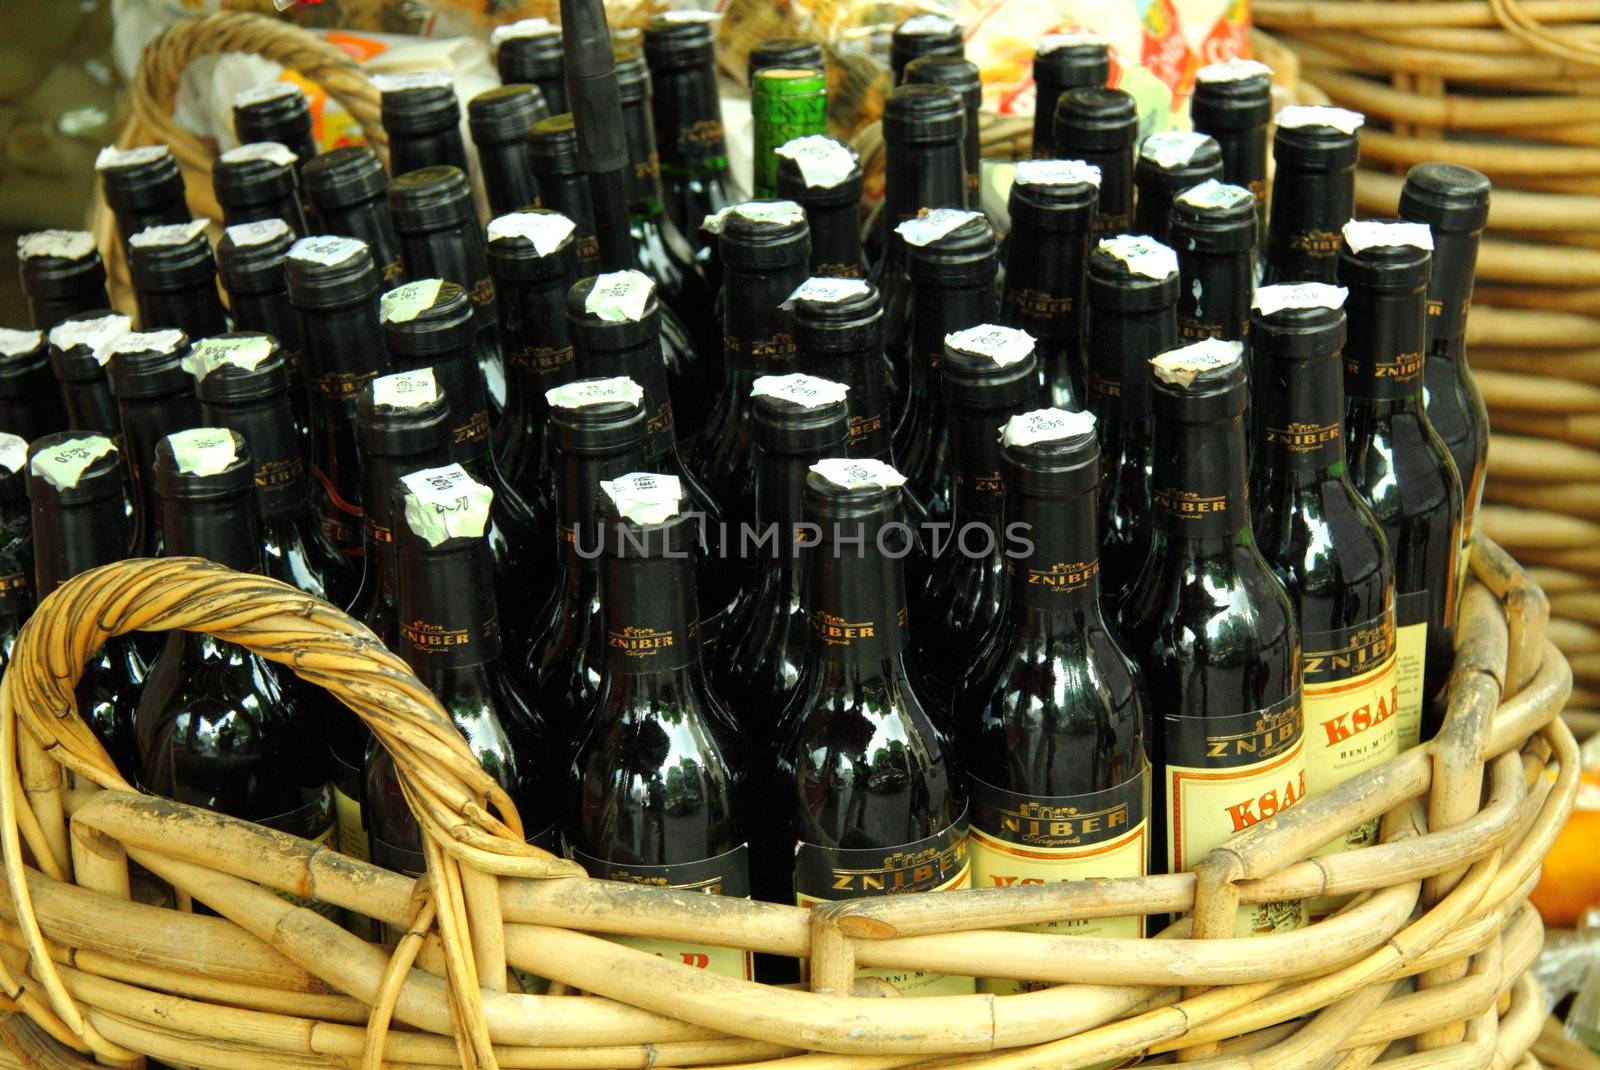 Wine By the Basketload by pjhpix